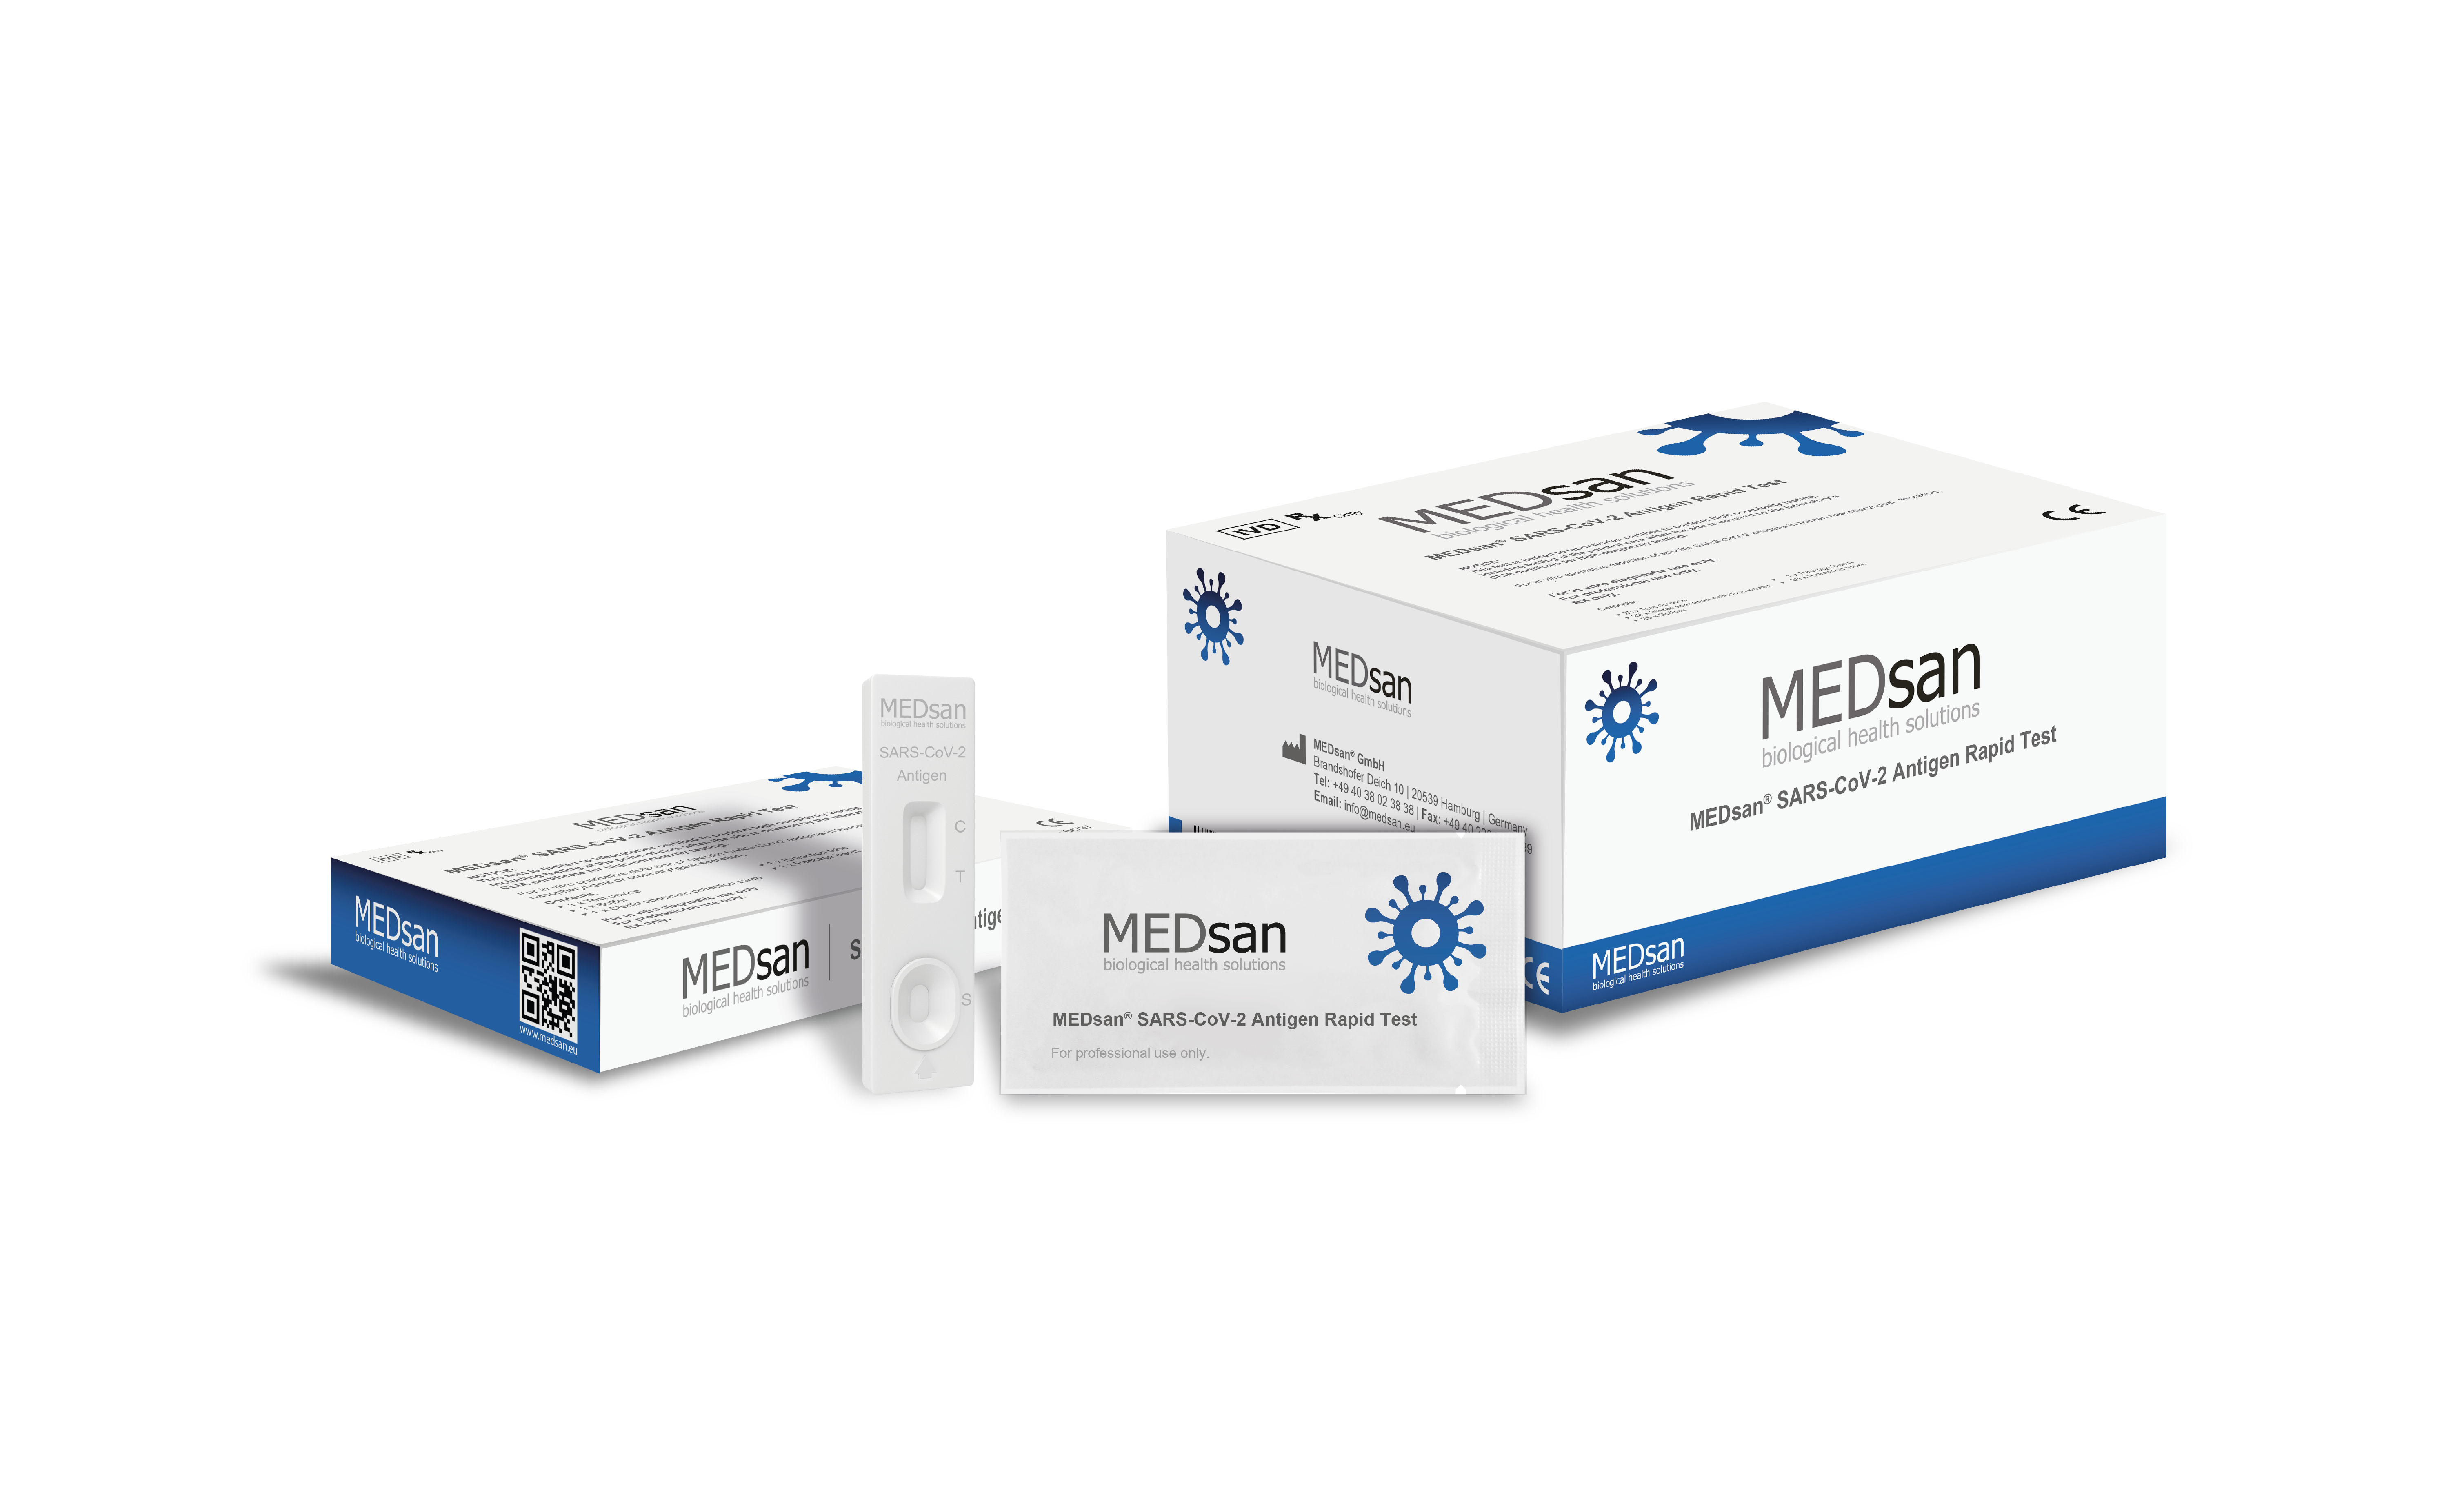 MEDsan® SARS-CoV-2 Antigen Rapid Test